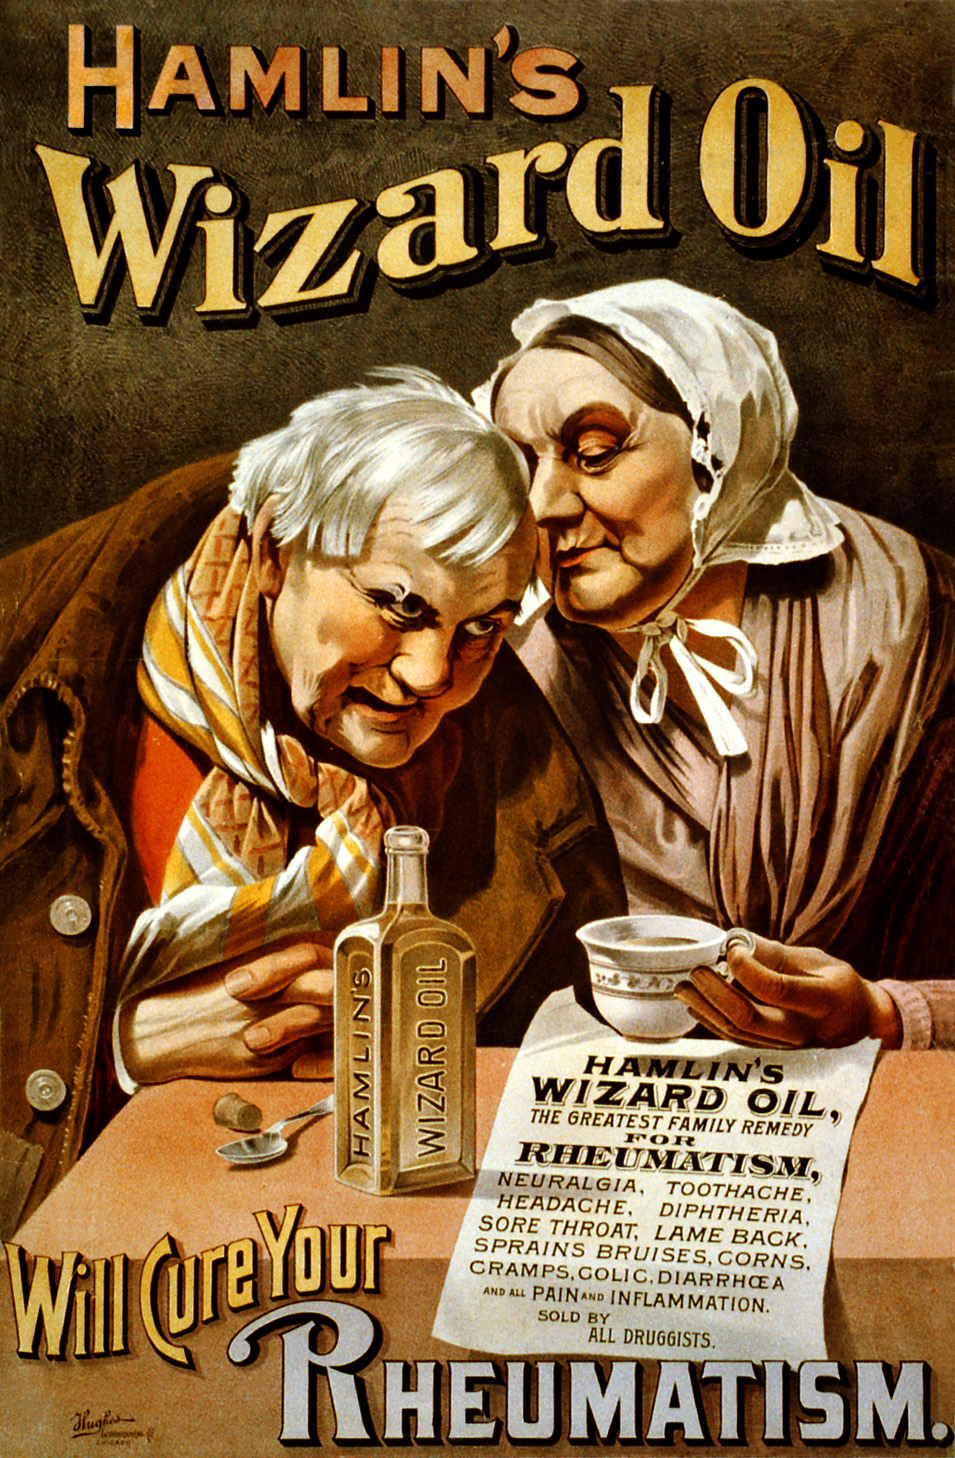 Hamlins wizard oil poster